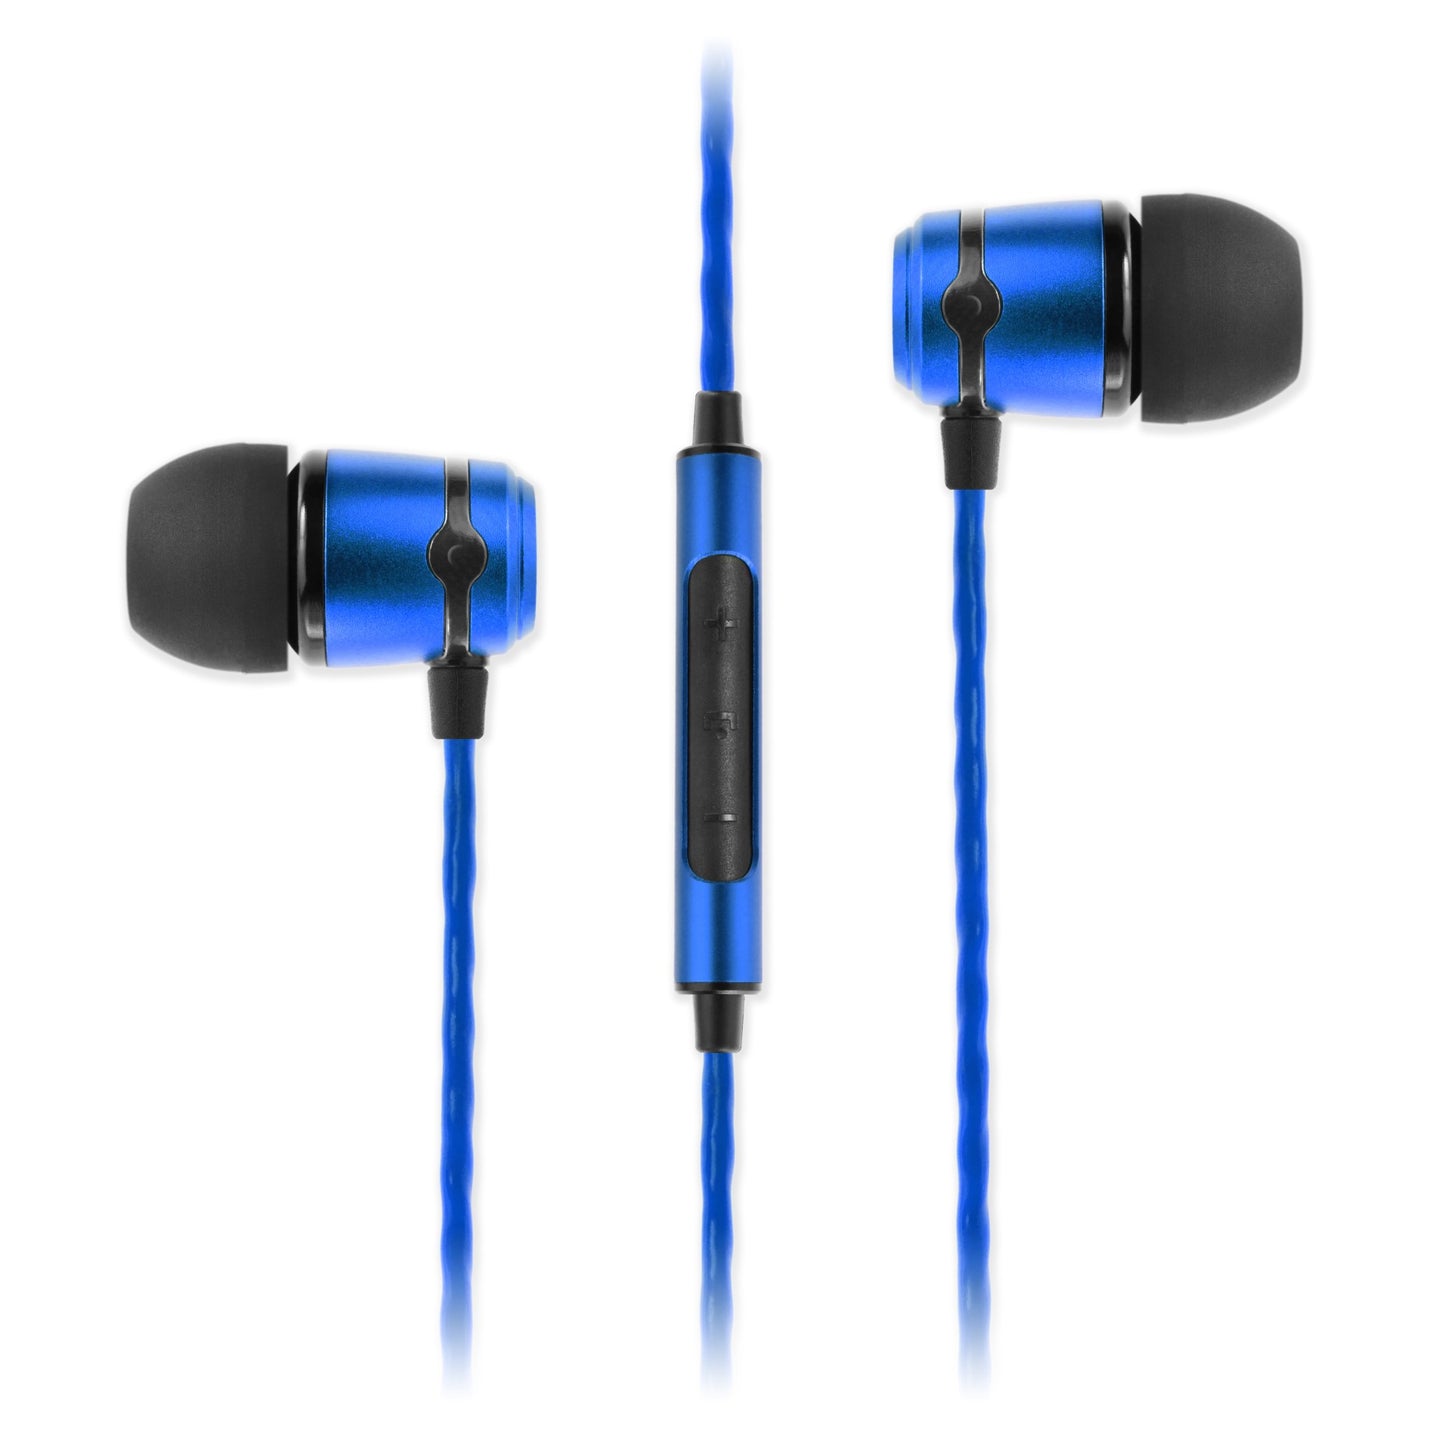 SoundMAGIC E50C In Ear Isolating Earphones with Mic - Refurbished